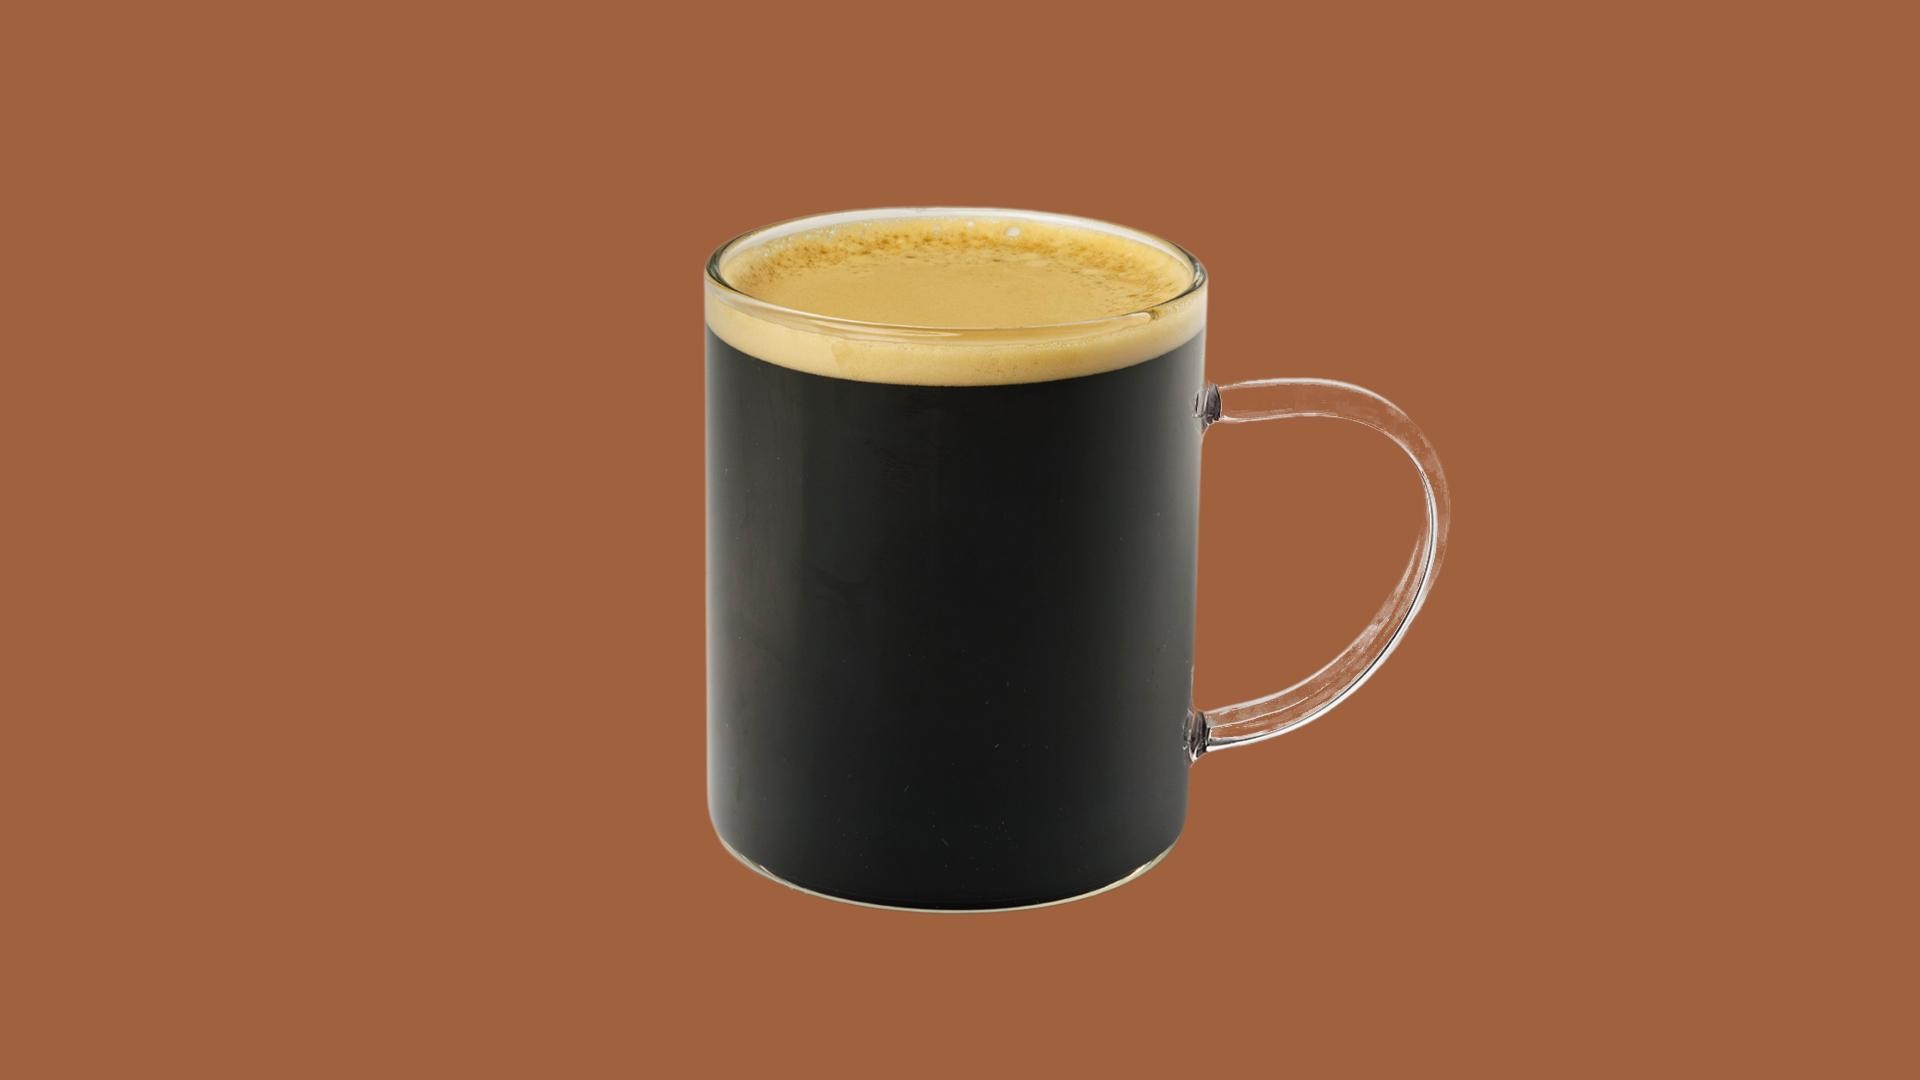 Hot Black Coffee